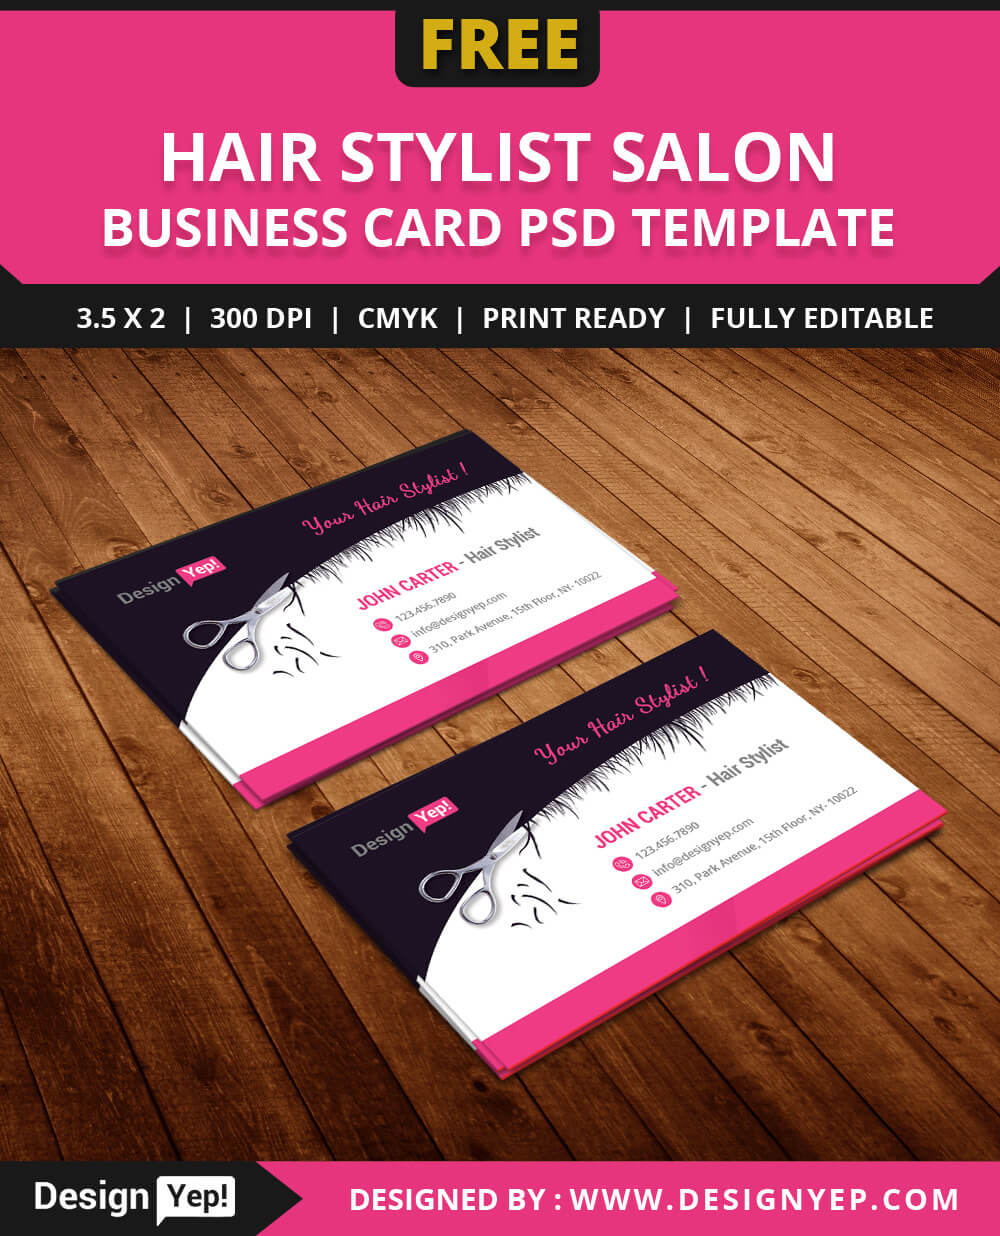 Free Hair Stylist Salon Business Card Template Psd On Behance With Hair Salon Business Card Template